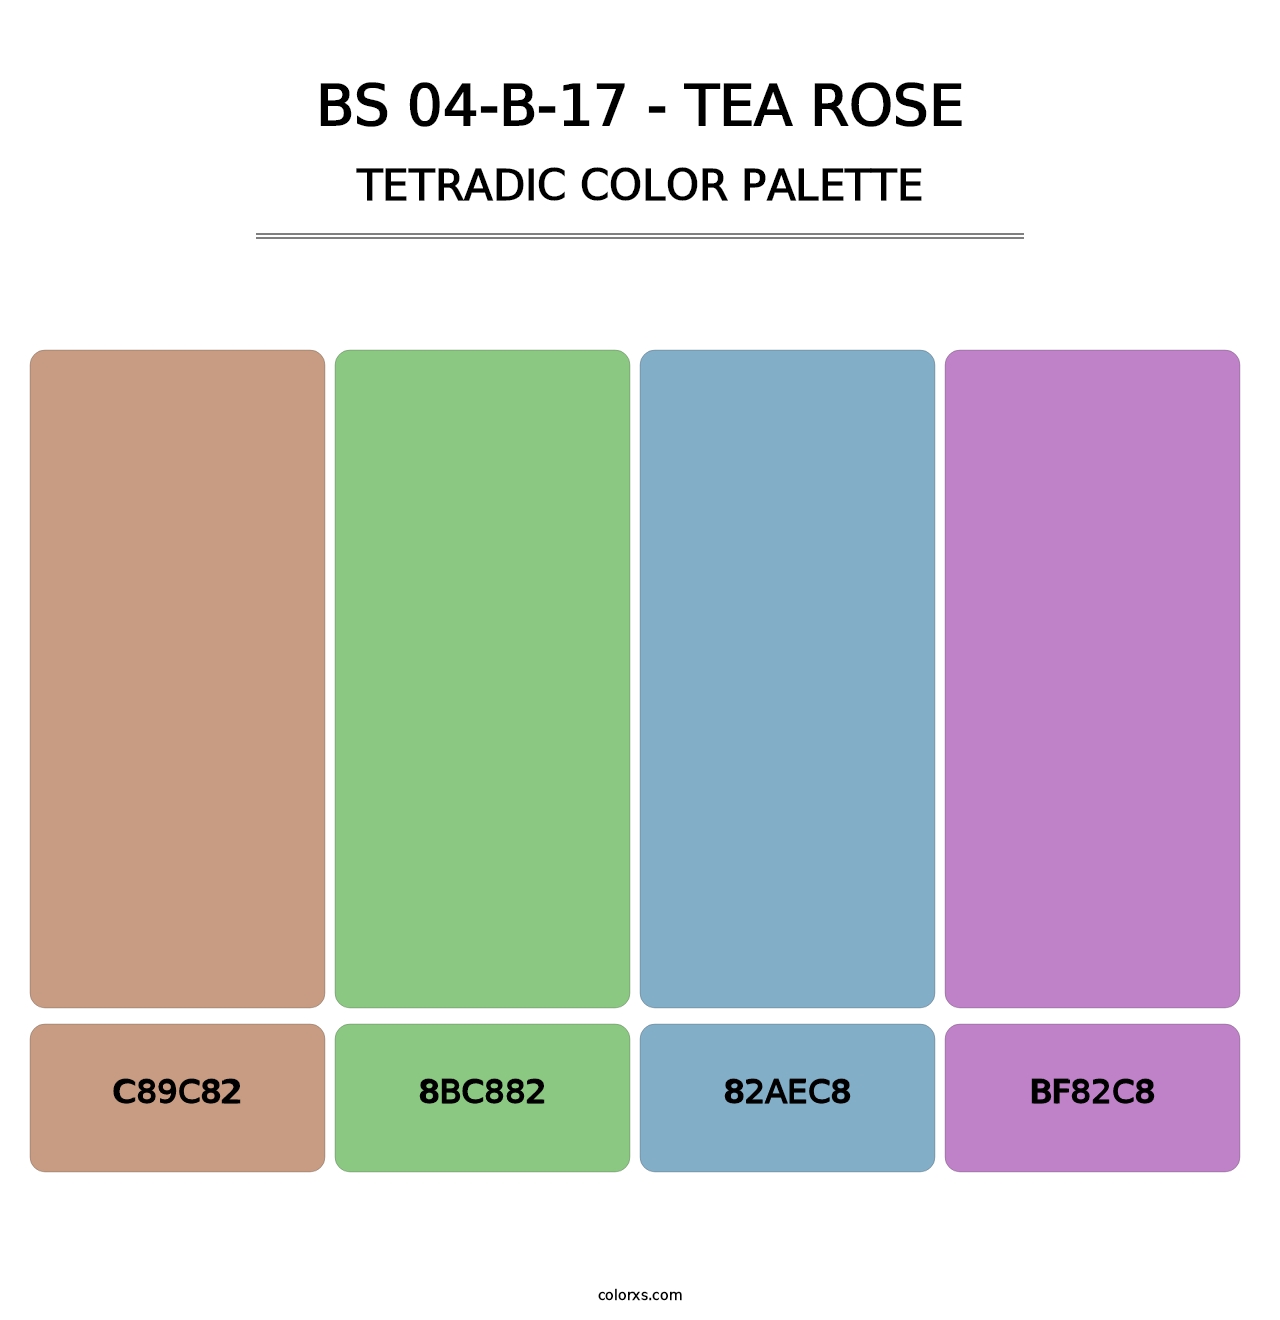 BS 04-B-17 - Tea Rose - Tetradic Color Palette